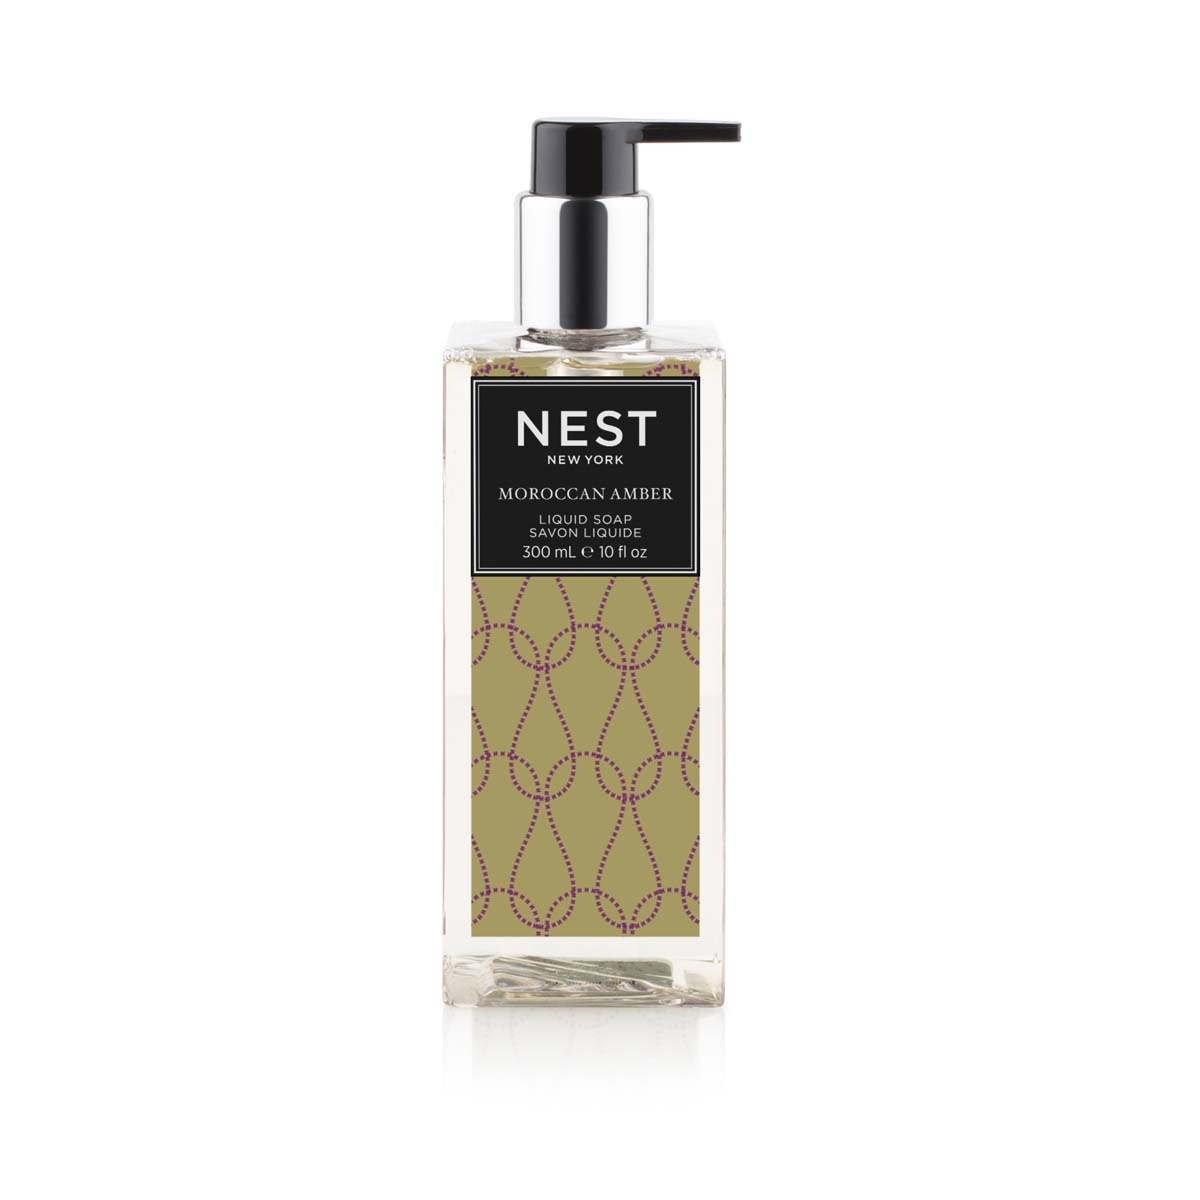 Moroccan Amber Liquid Soap 10 fl.oz/300 ml by Nest New York